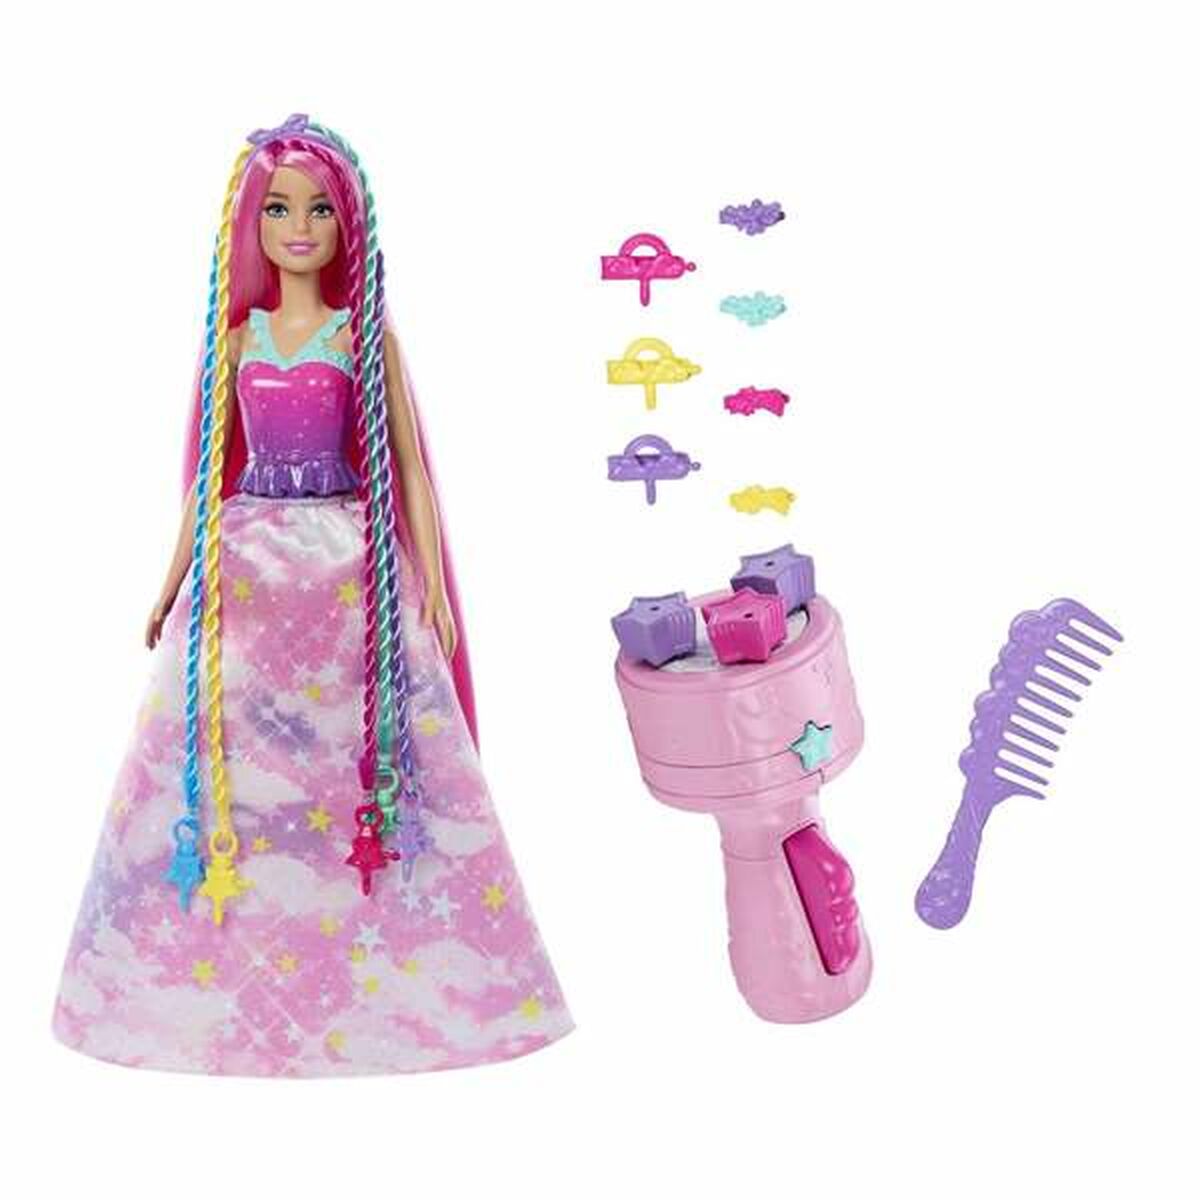 Bambola Barbie Magic braids